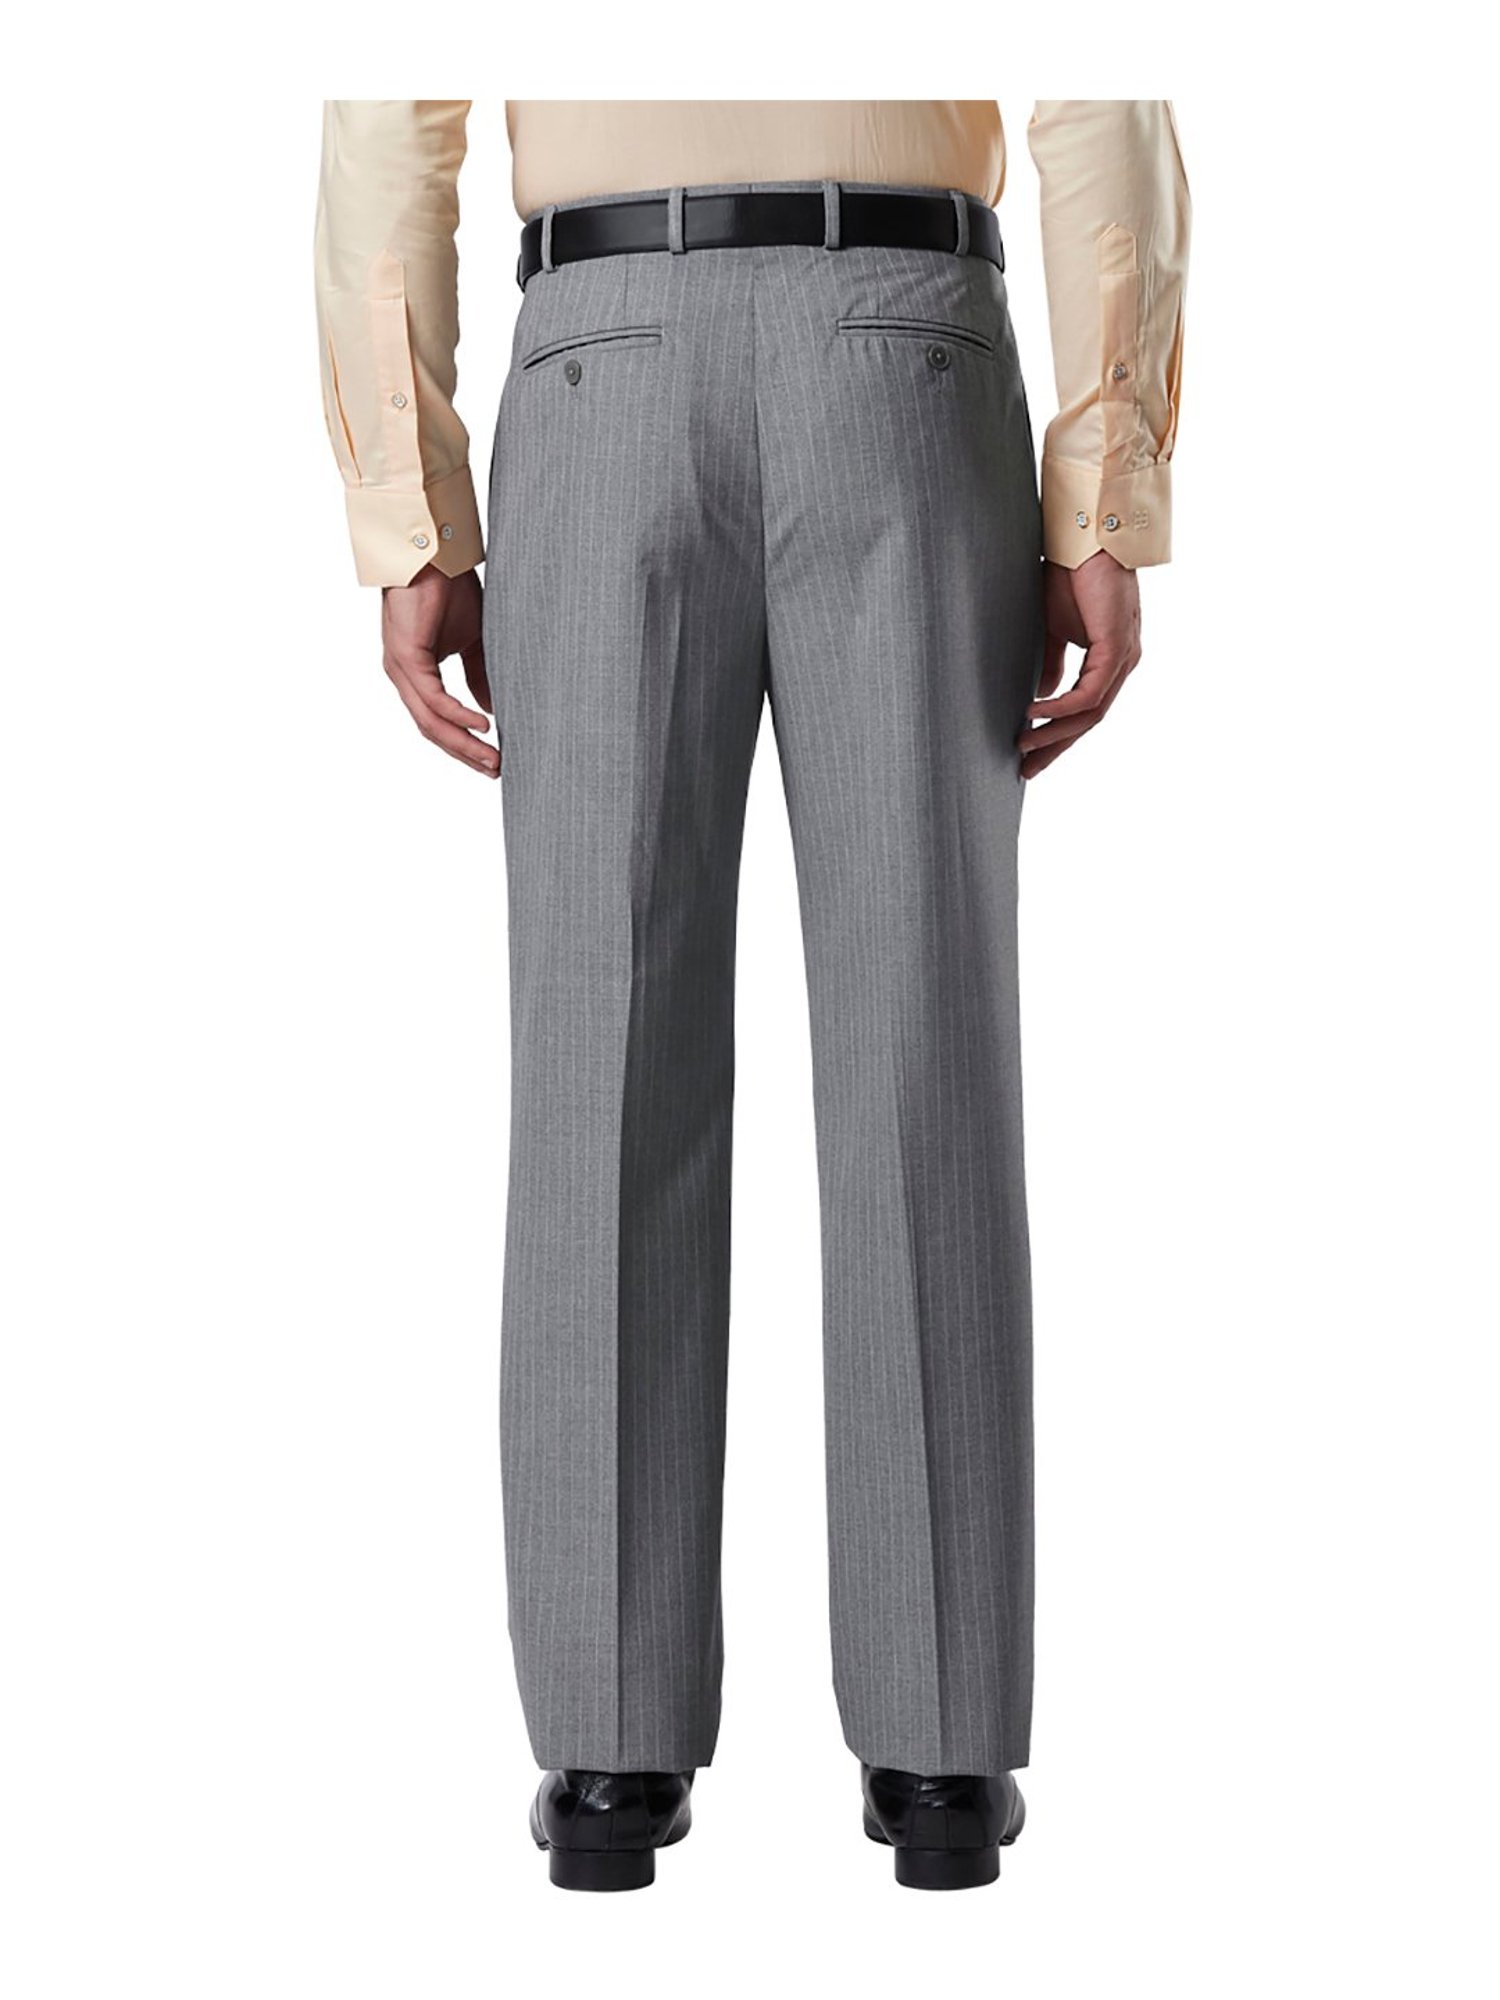 Buy Grey Trousers  Pants for Men by RAYMOND Online  Ajiocom